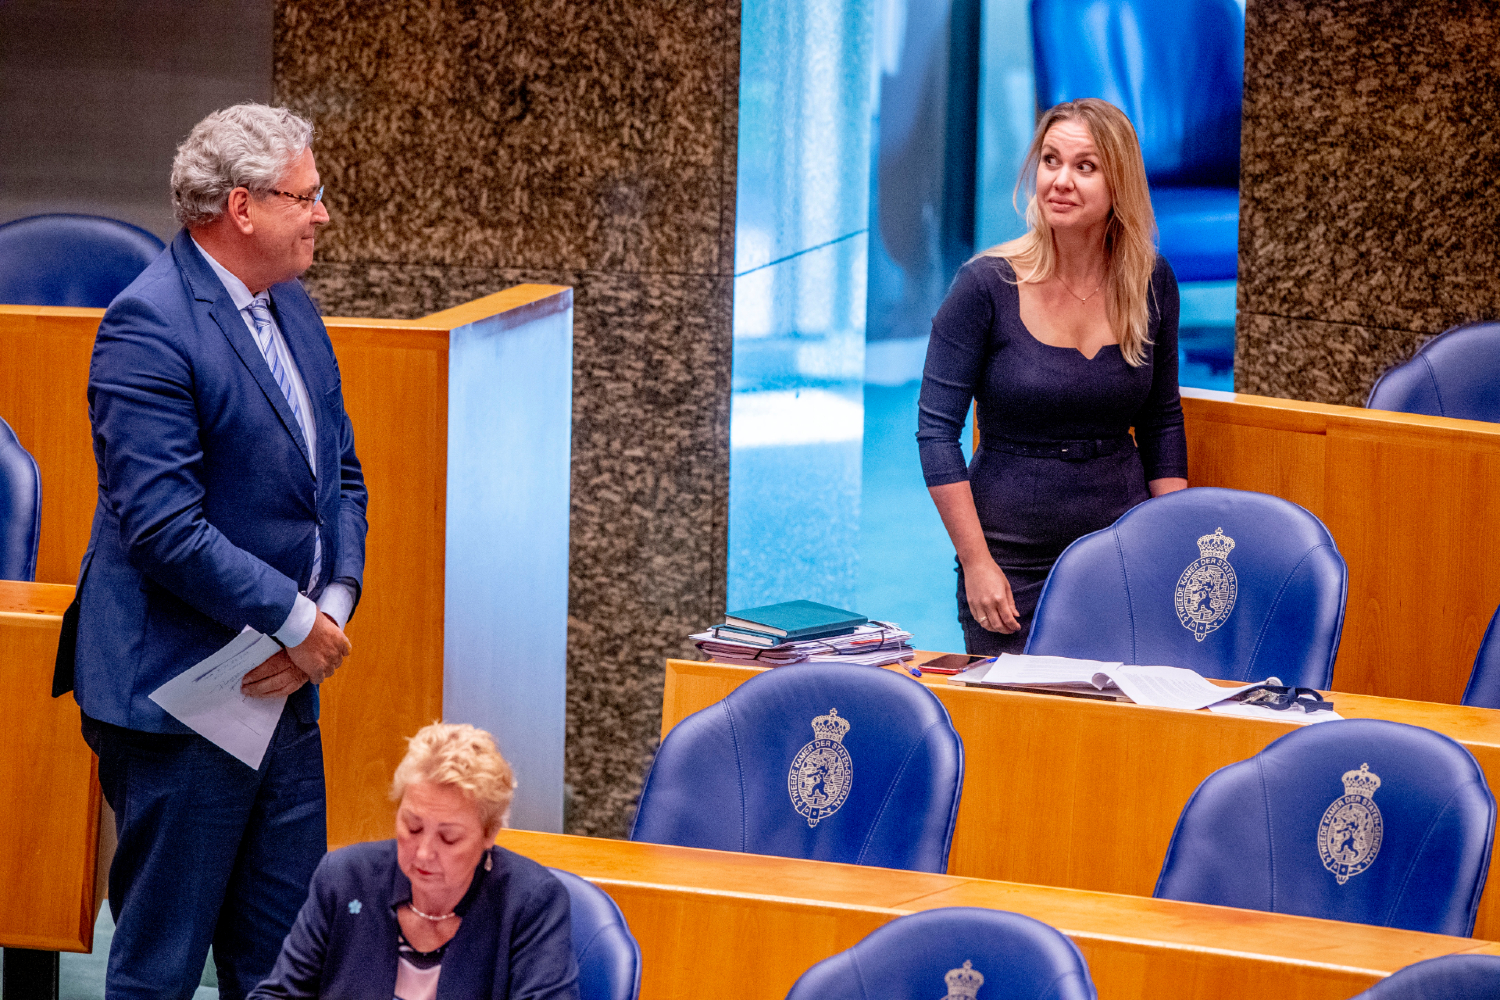 Henk Krol and Femke Merel van Kooten during a coronavirus debate.